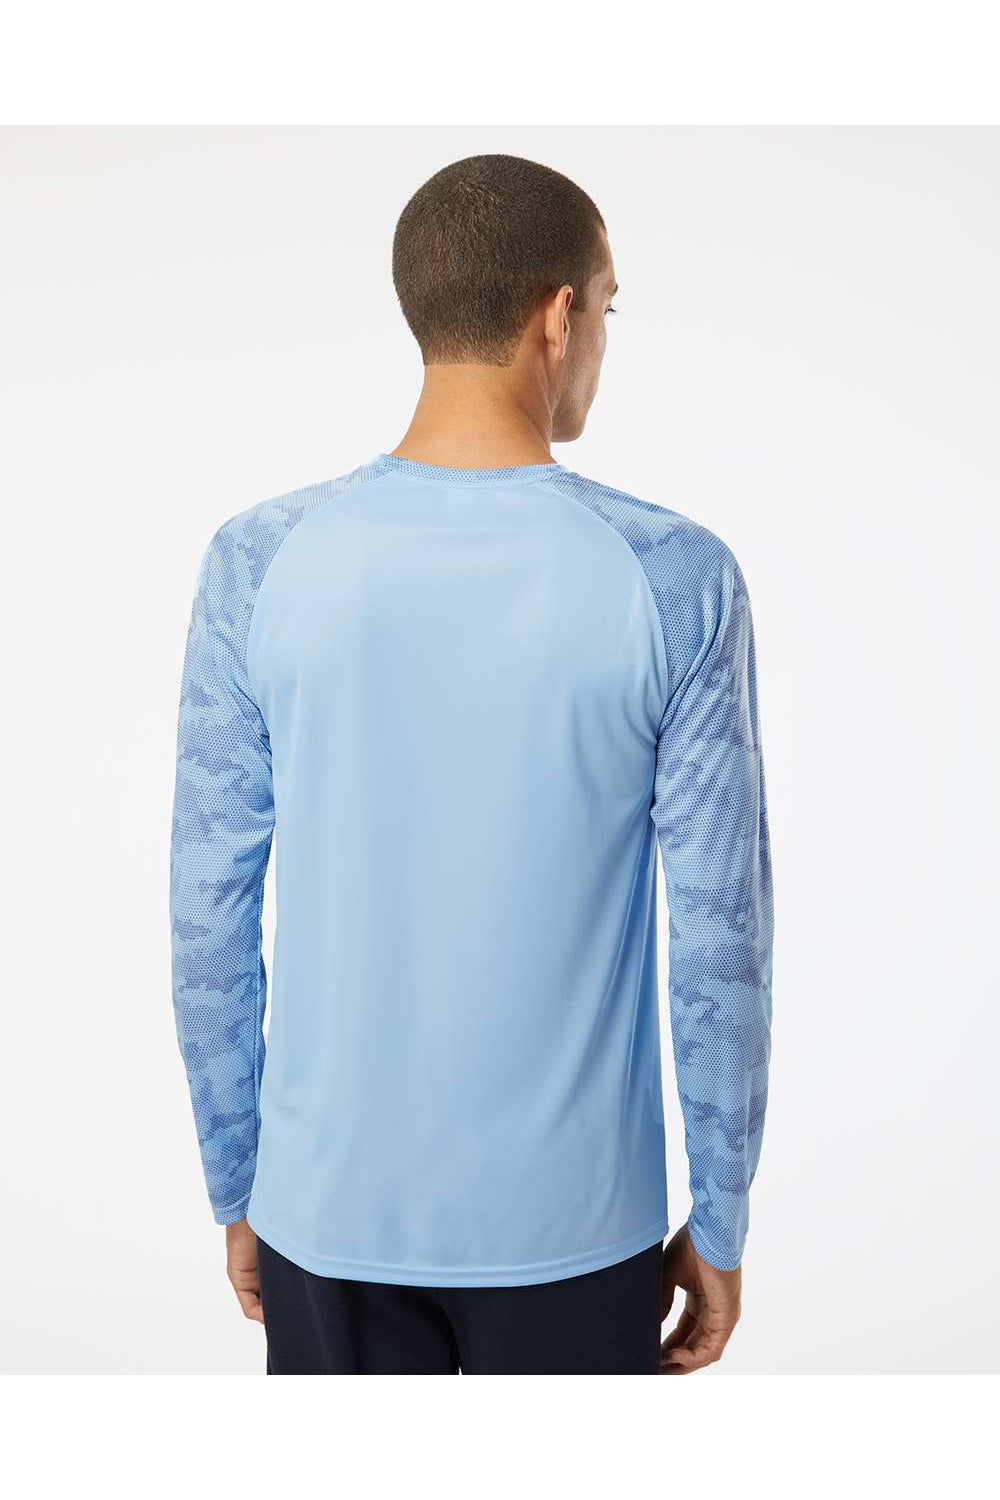 Paragon 216 Mens Cayman Performance Camo Colorblocked Long Sleeve Crewneck T-Shirt Blue Mist Model Back